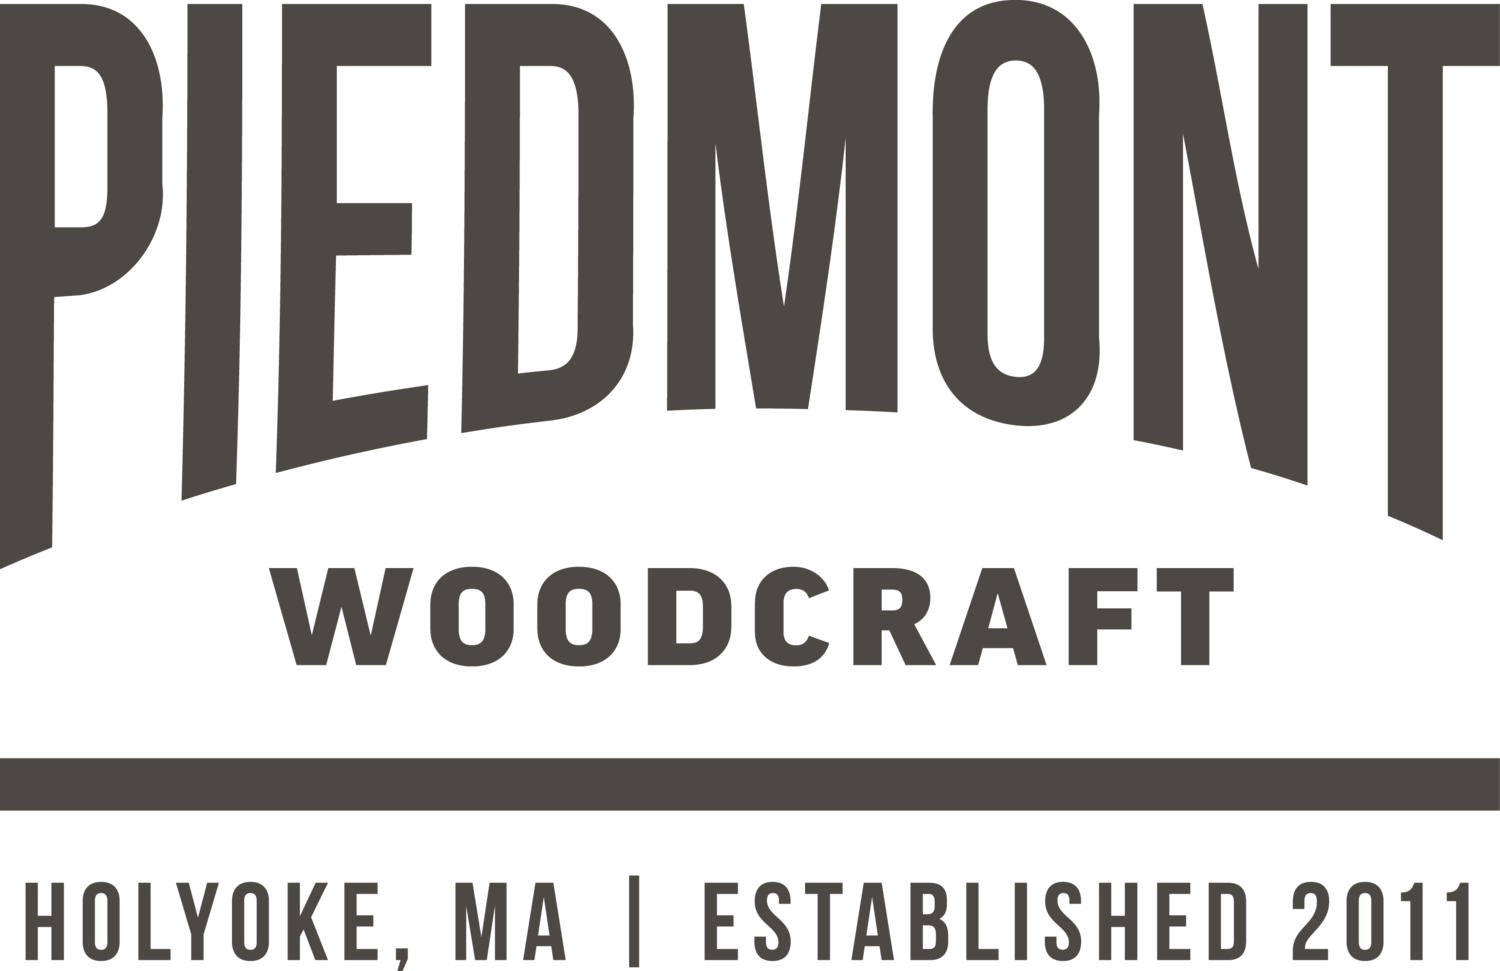 Piedmont Woodcraft